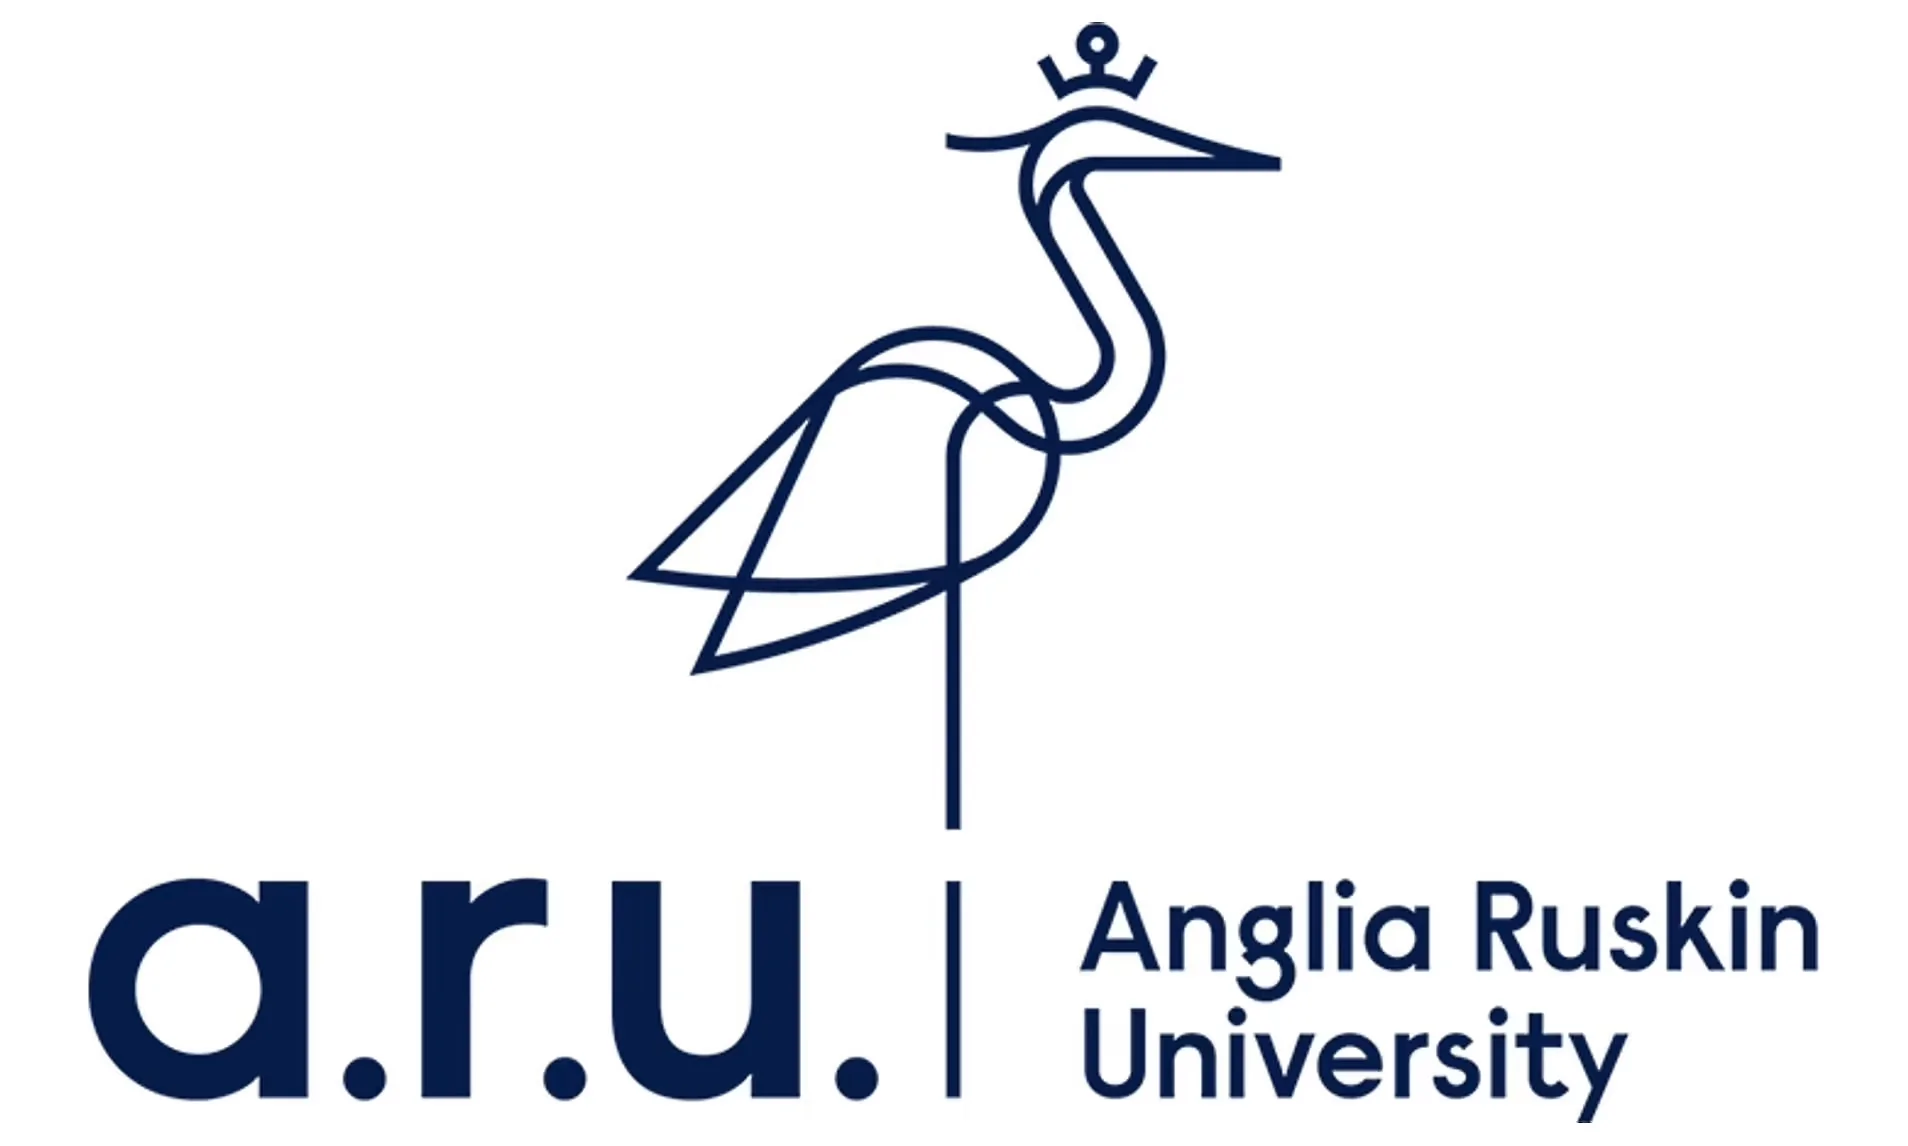 Anglia Ruskin University logo.